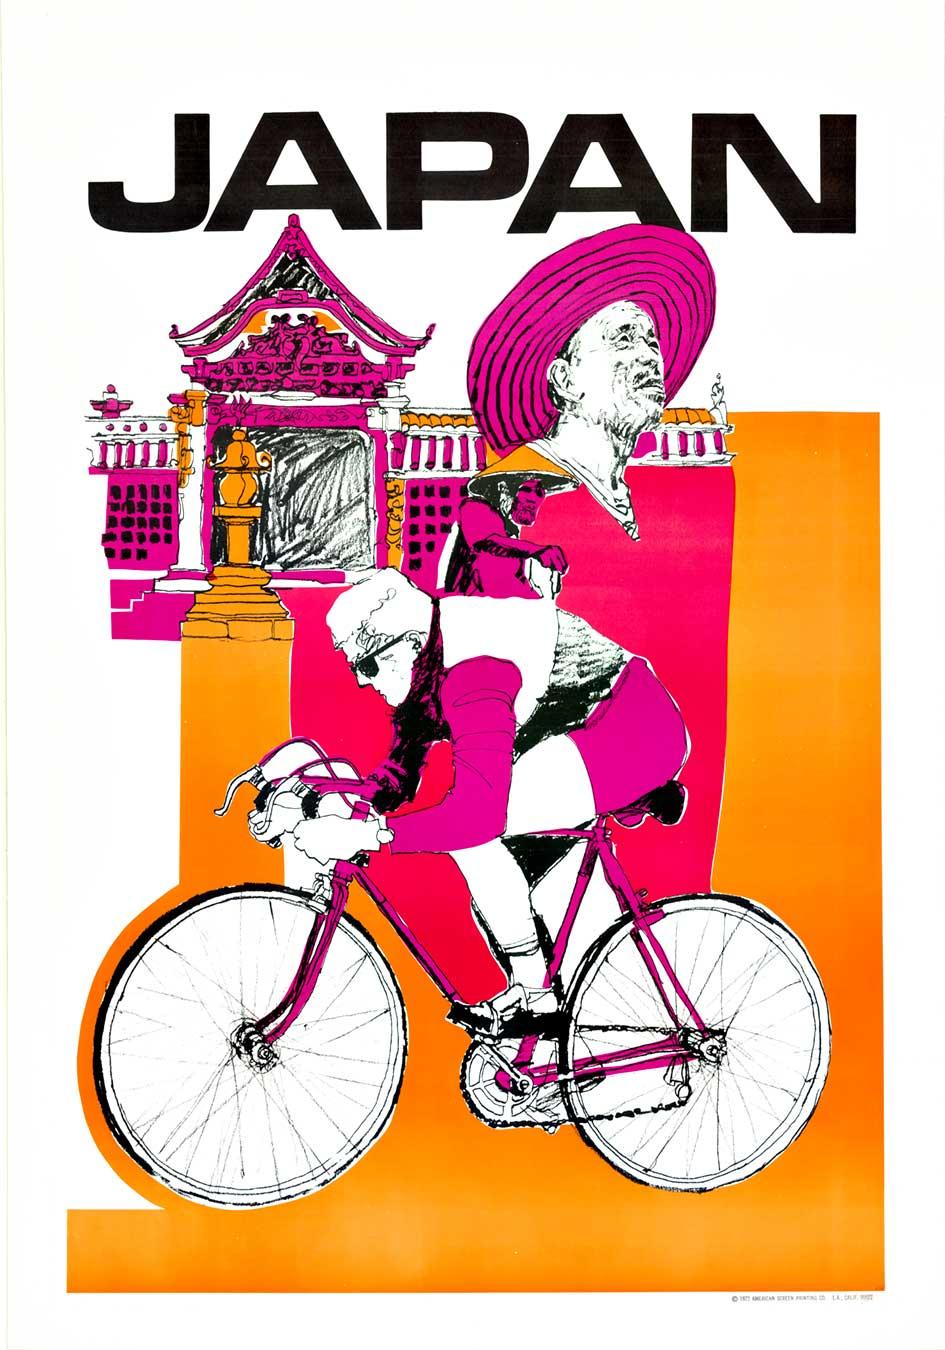 Unknown Landscape Print - Original "Japan" vintage travel poster  serigraph  bicycle